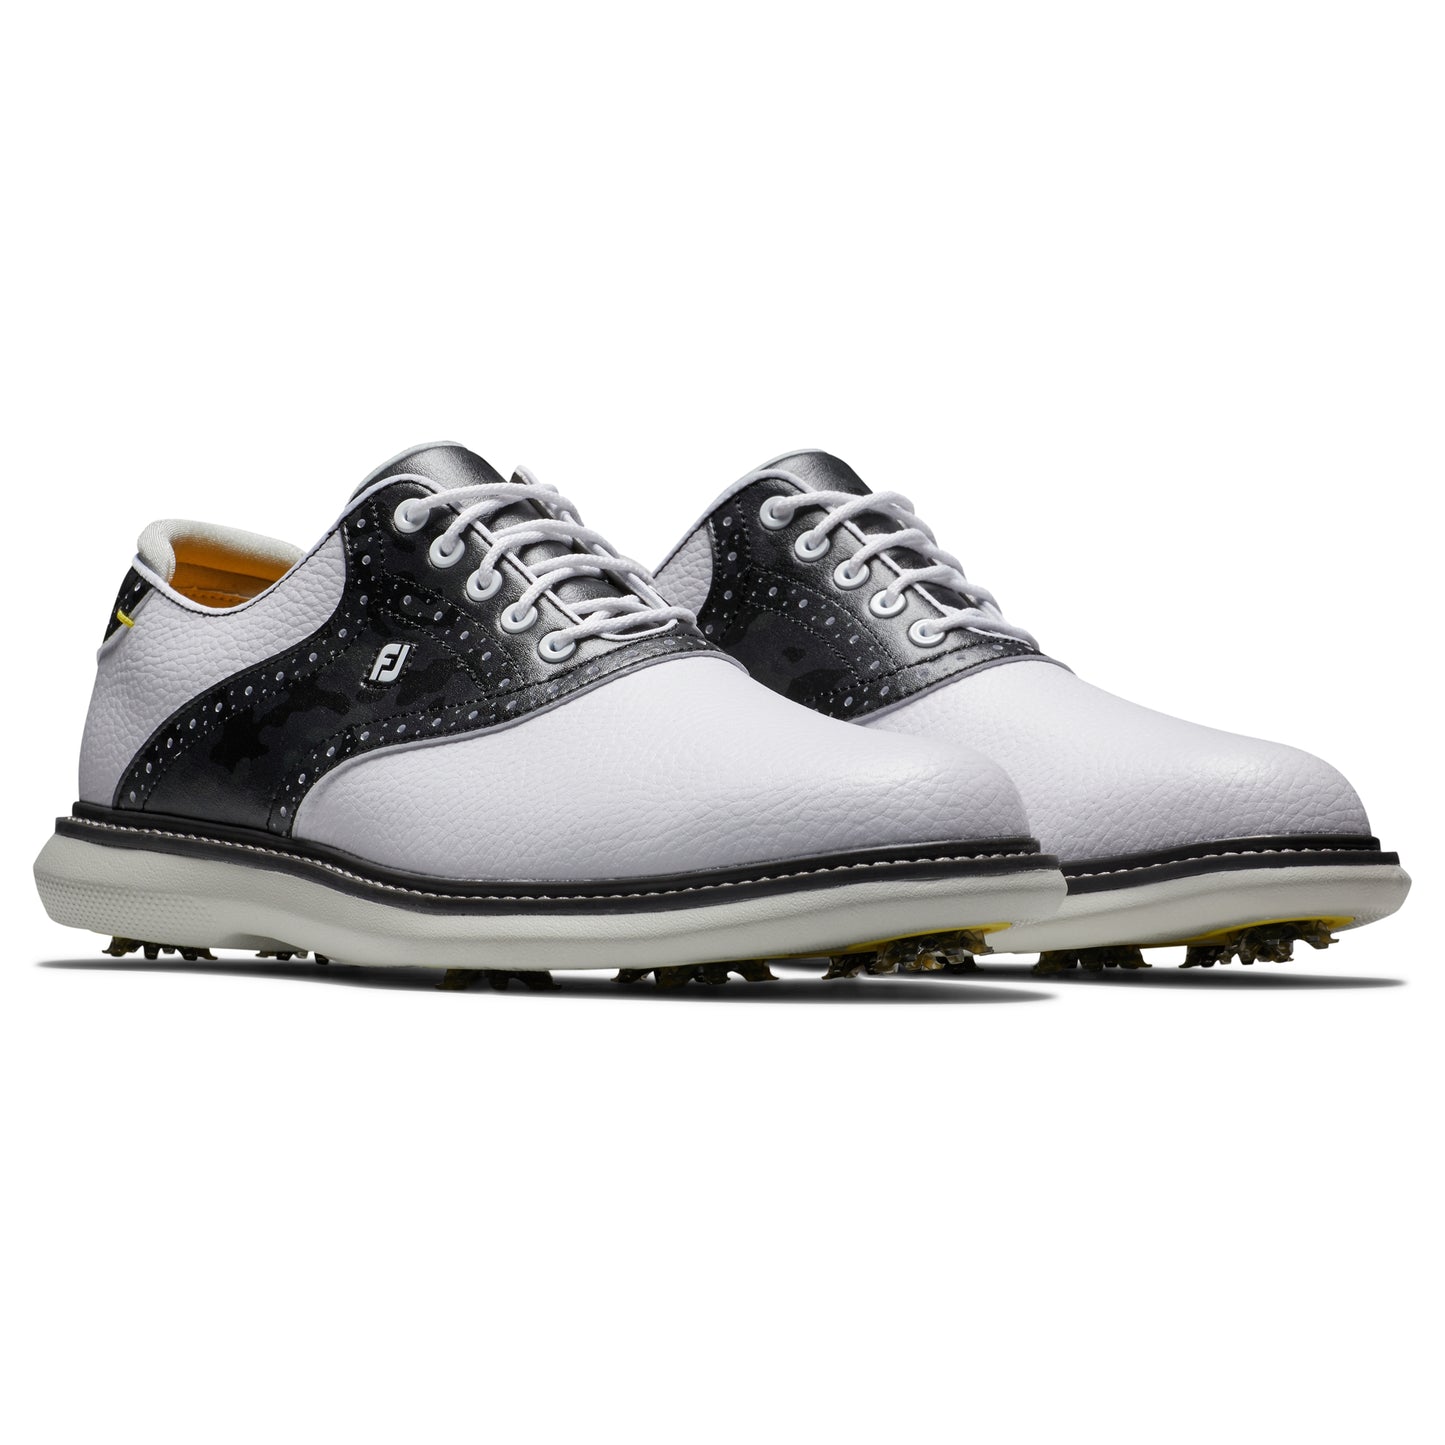 FootJoy Traditions Men's Golf Shoes 57928 - White/Black